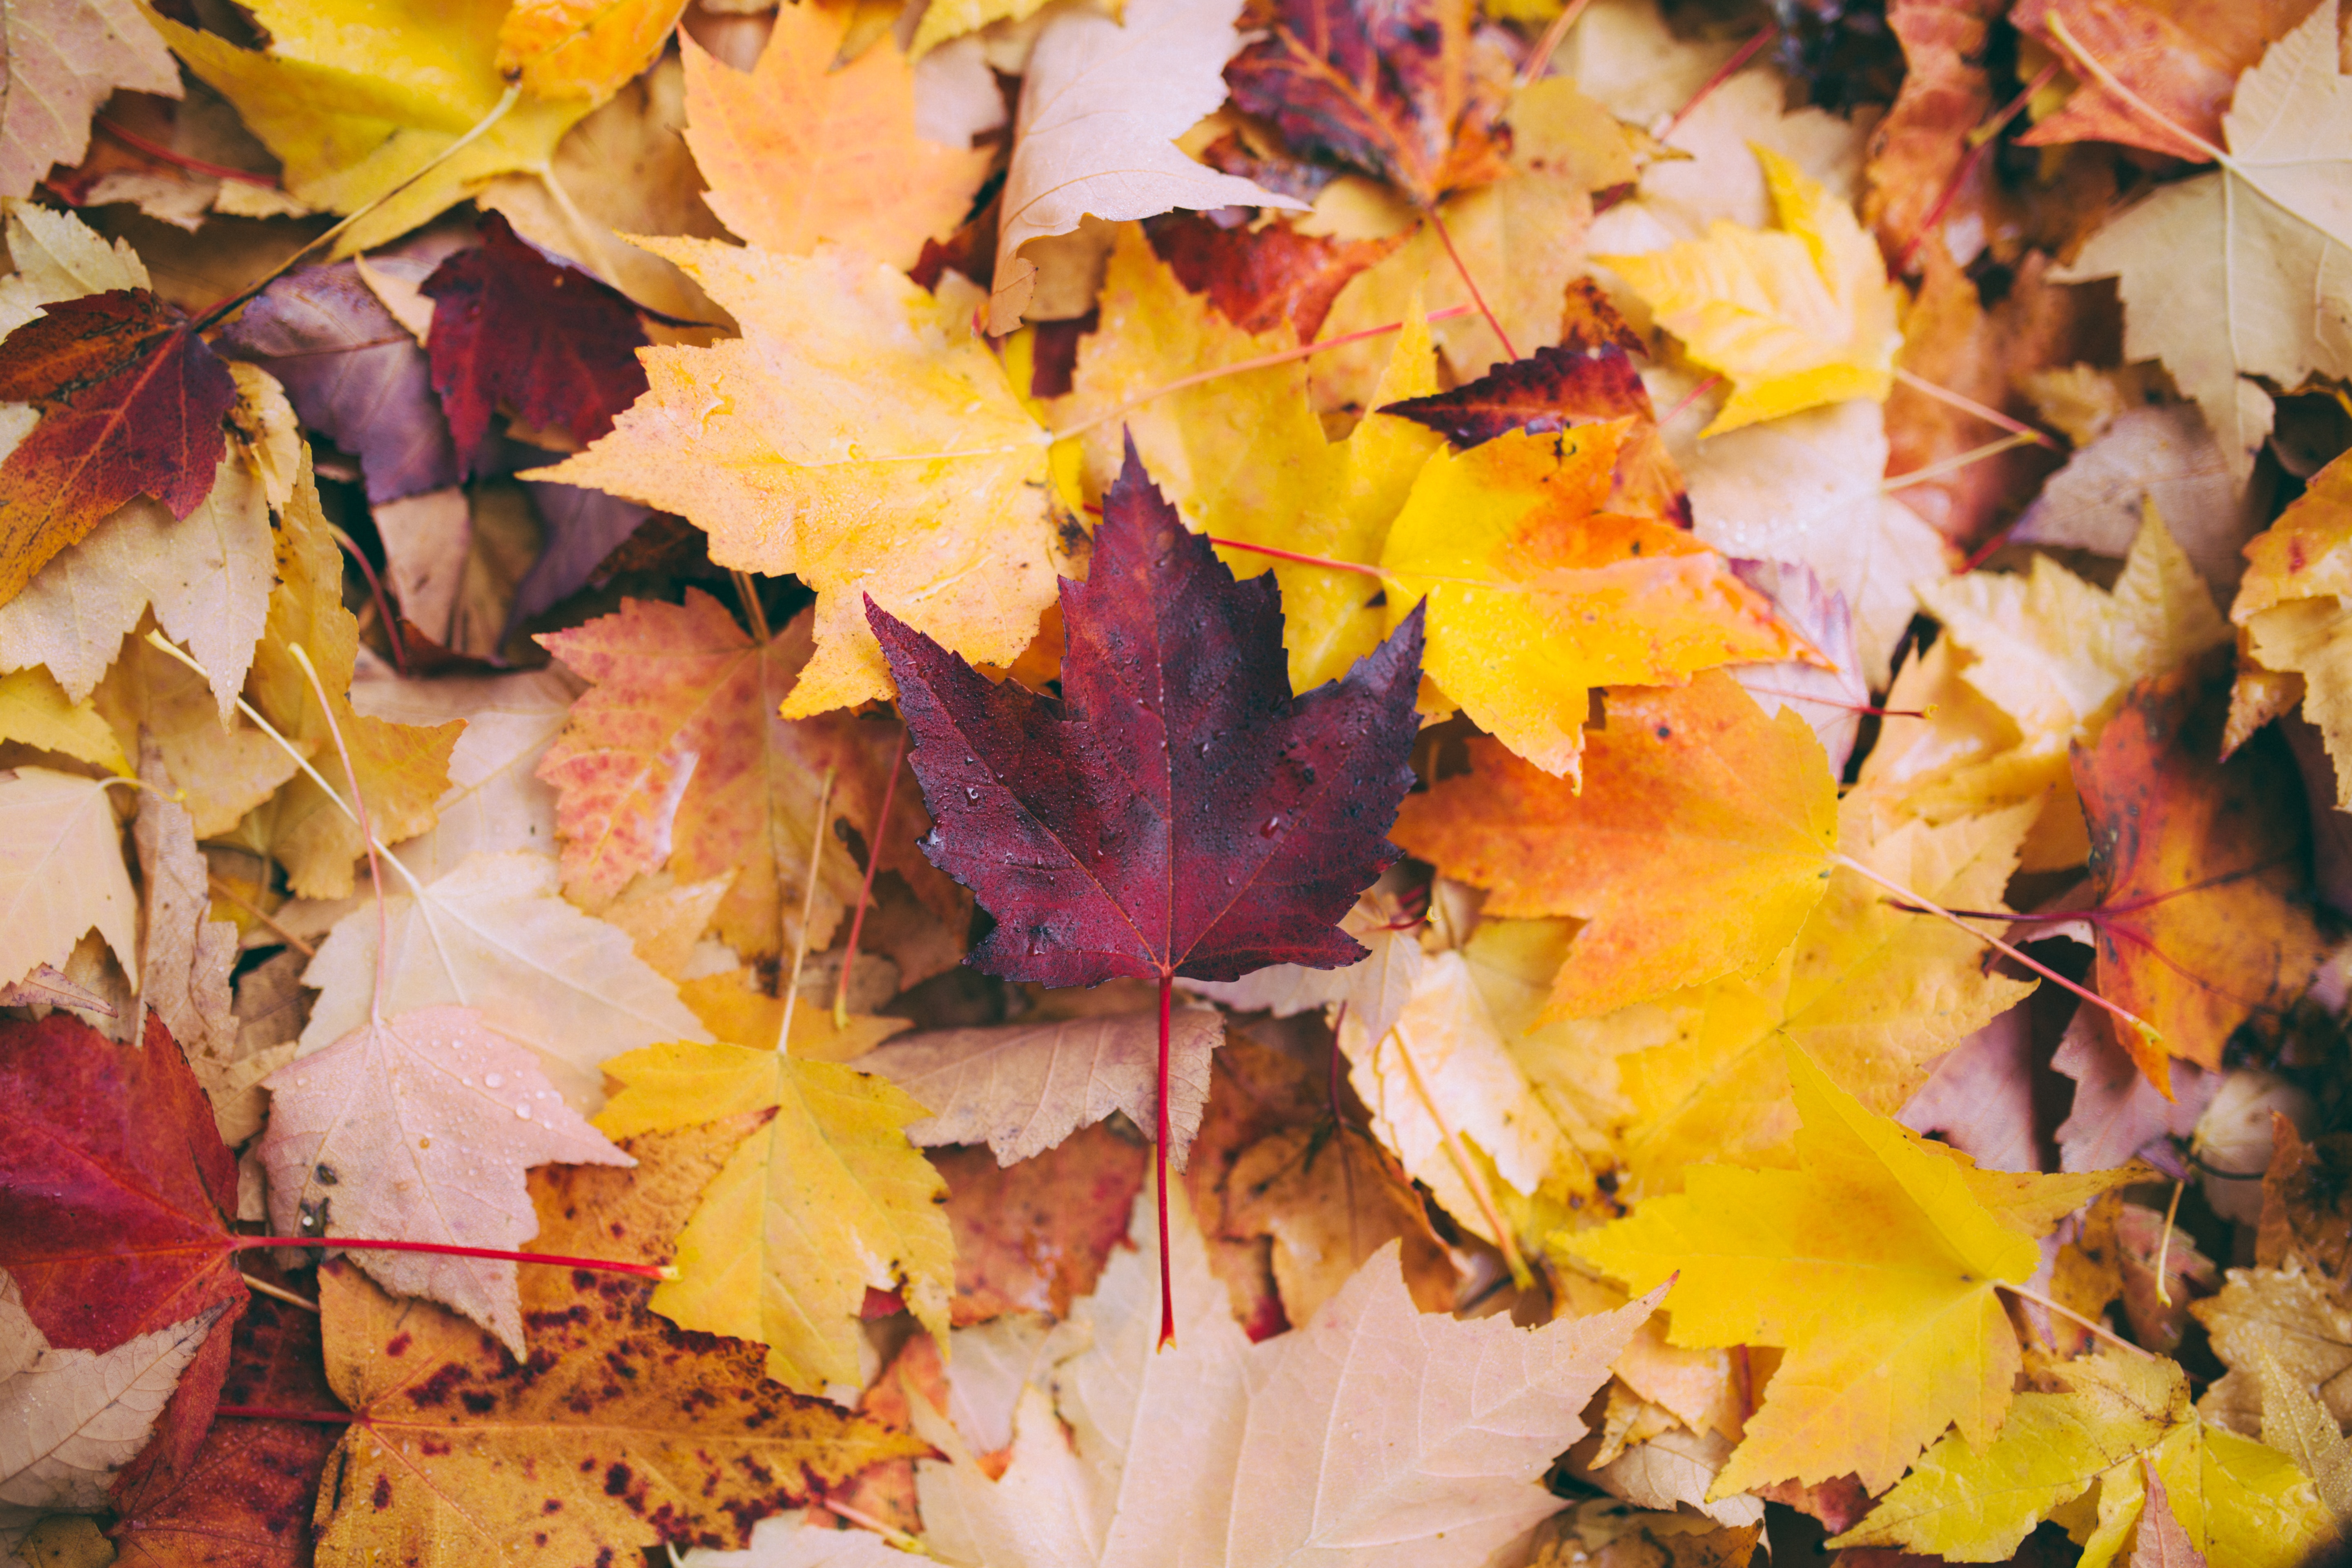 Fall leaves Photo by Greg Shield on Unsplash